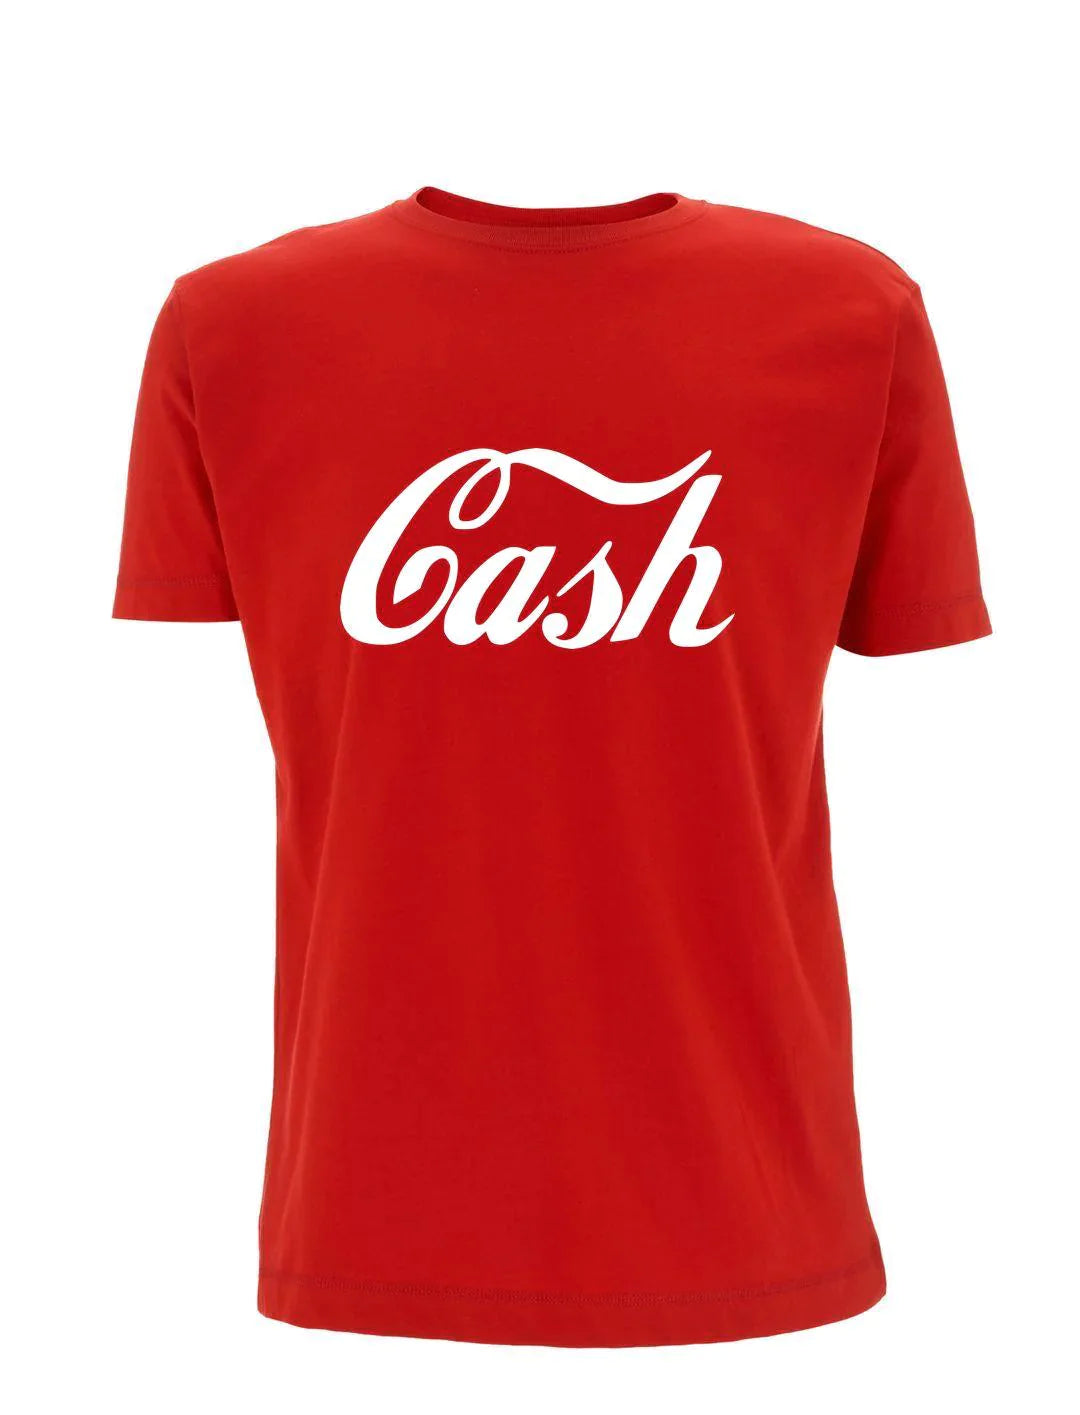 Jack white t-shirt, CASH